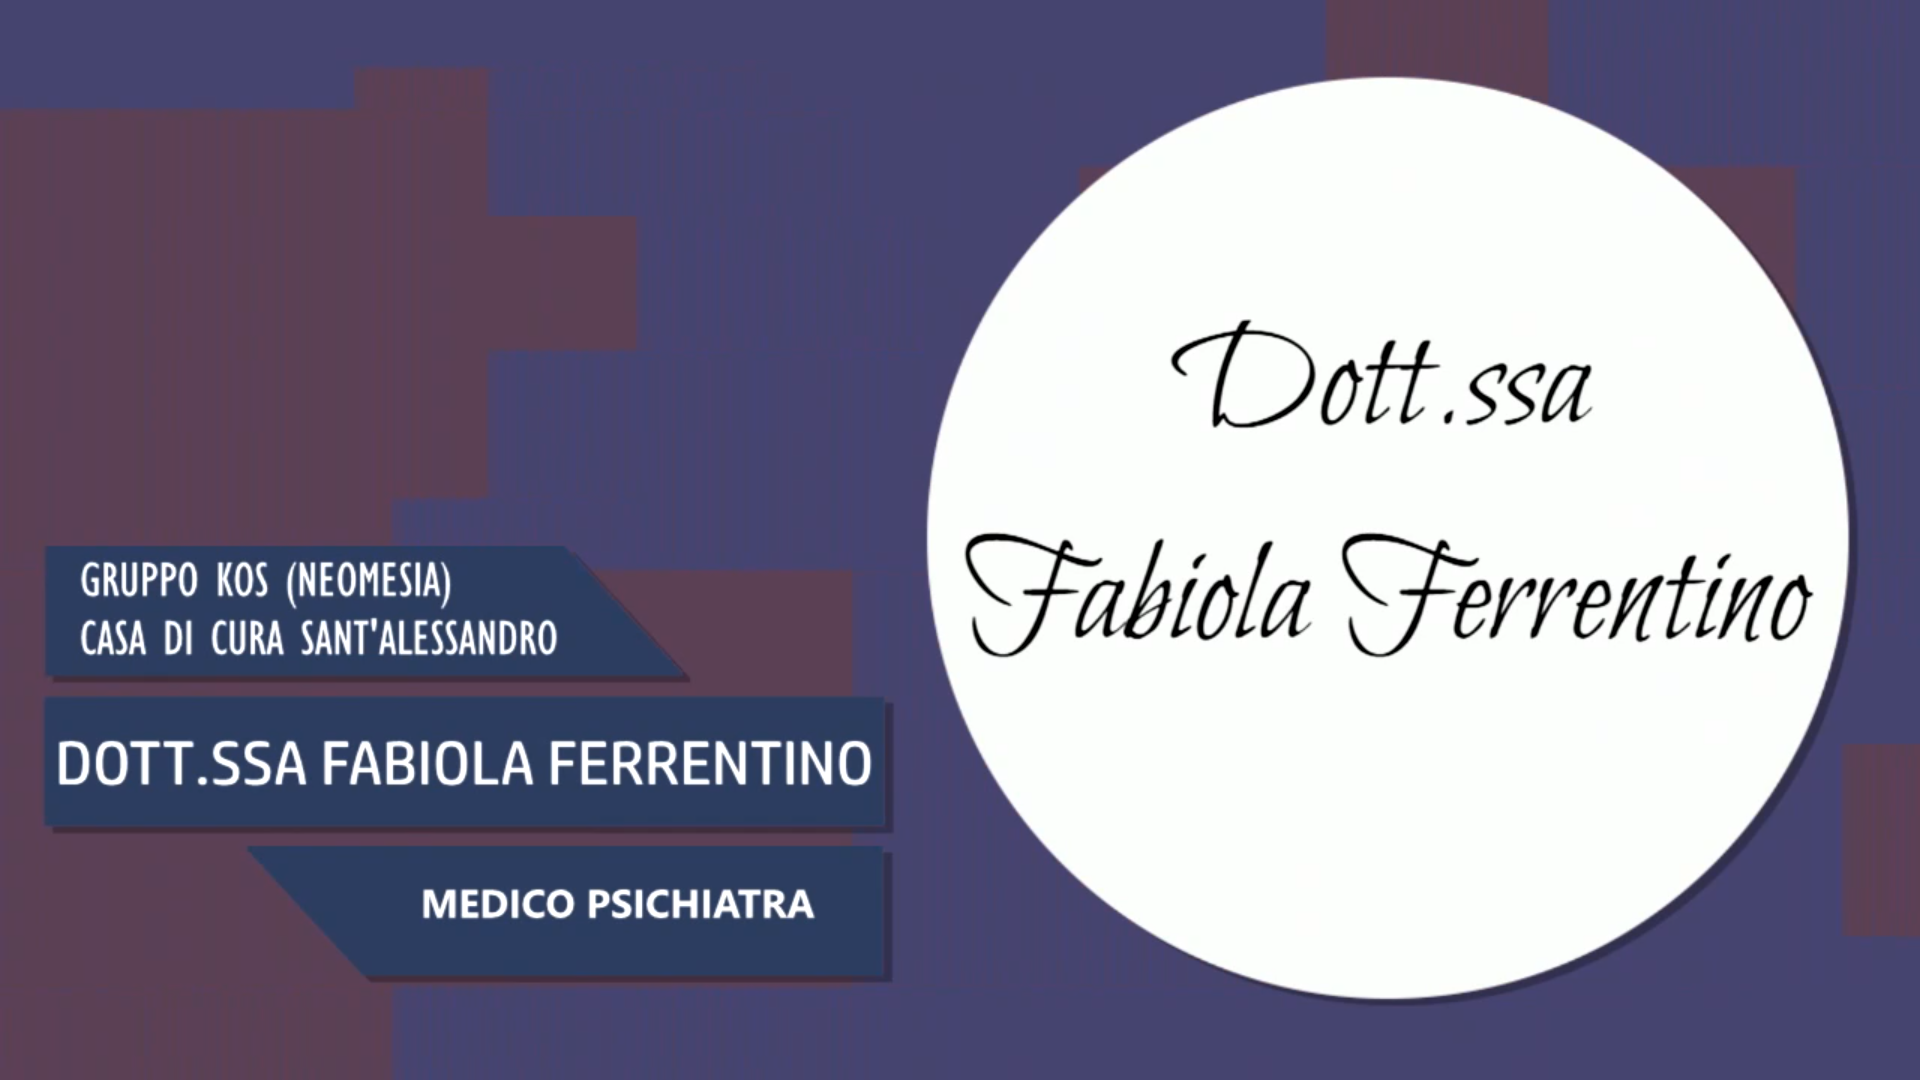 Intervista alla Dott.ssa Fabiola Ferrentino – Gruppo KOS